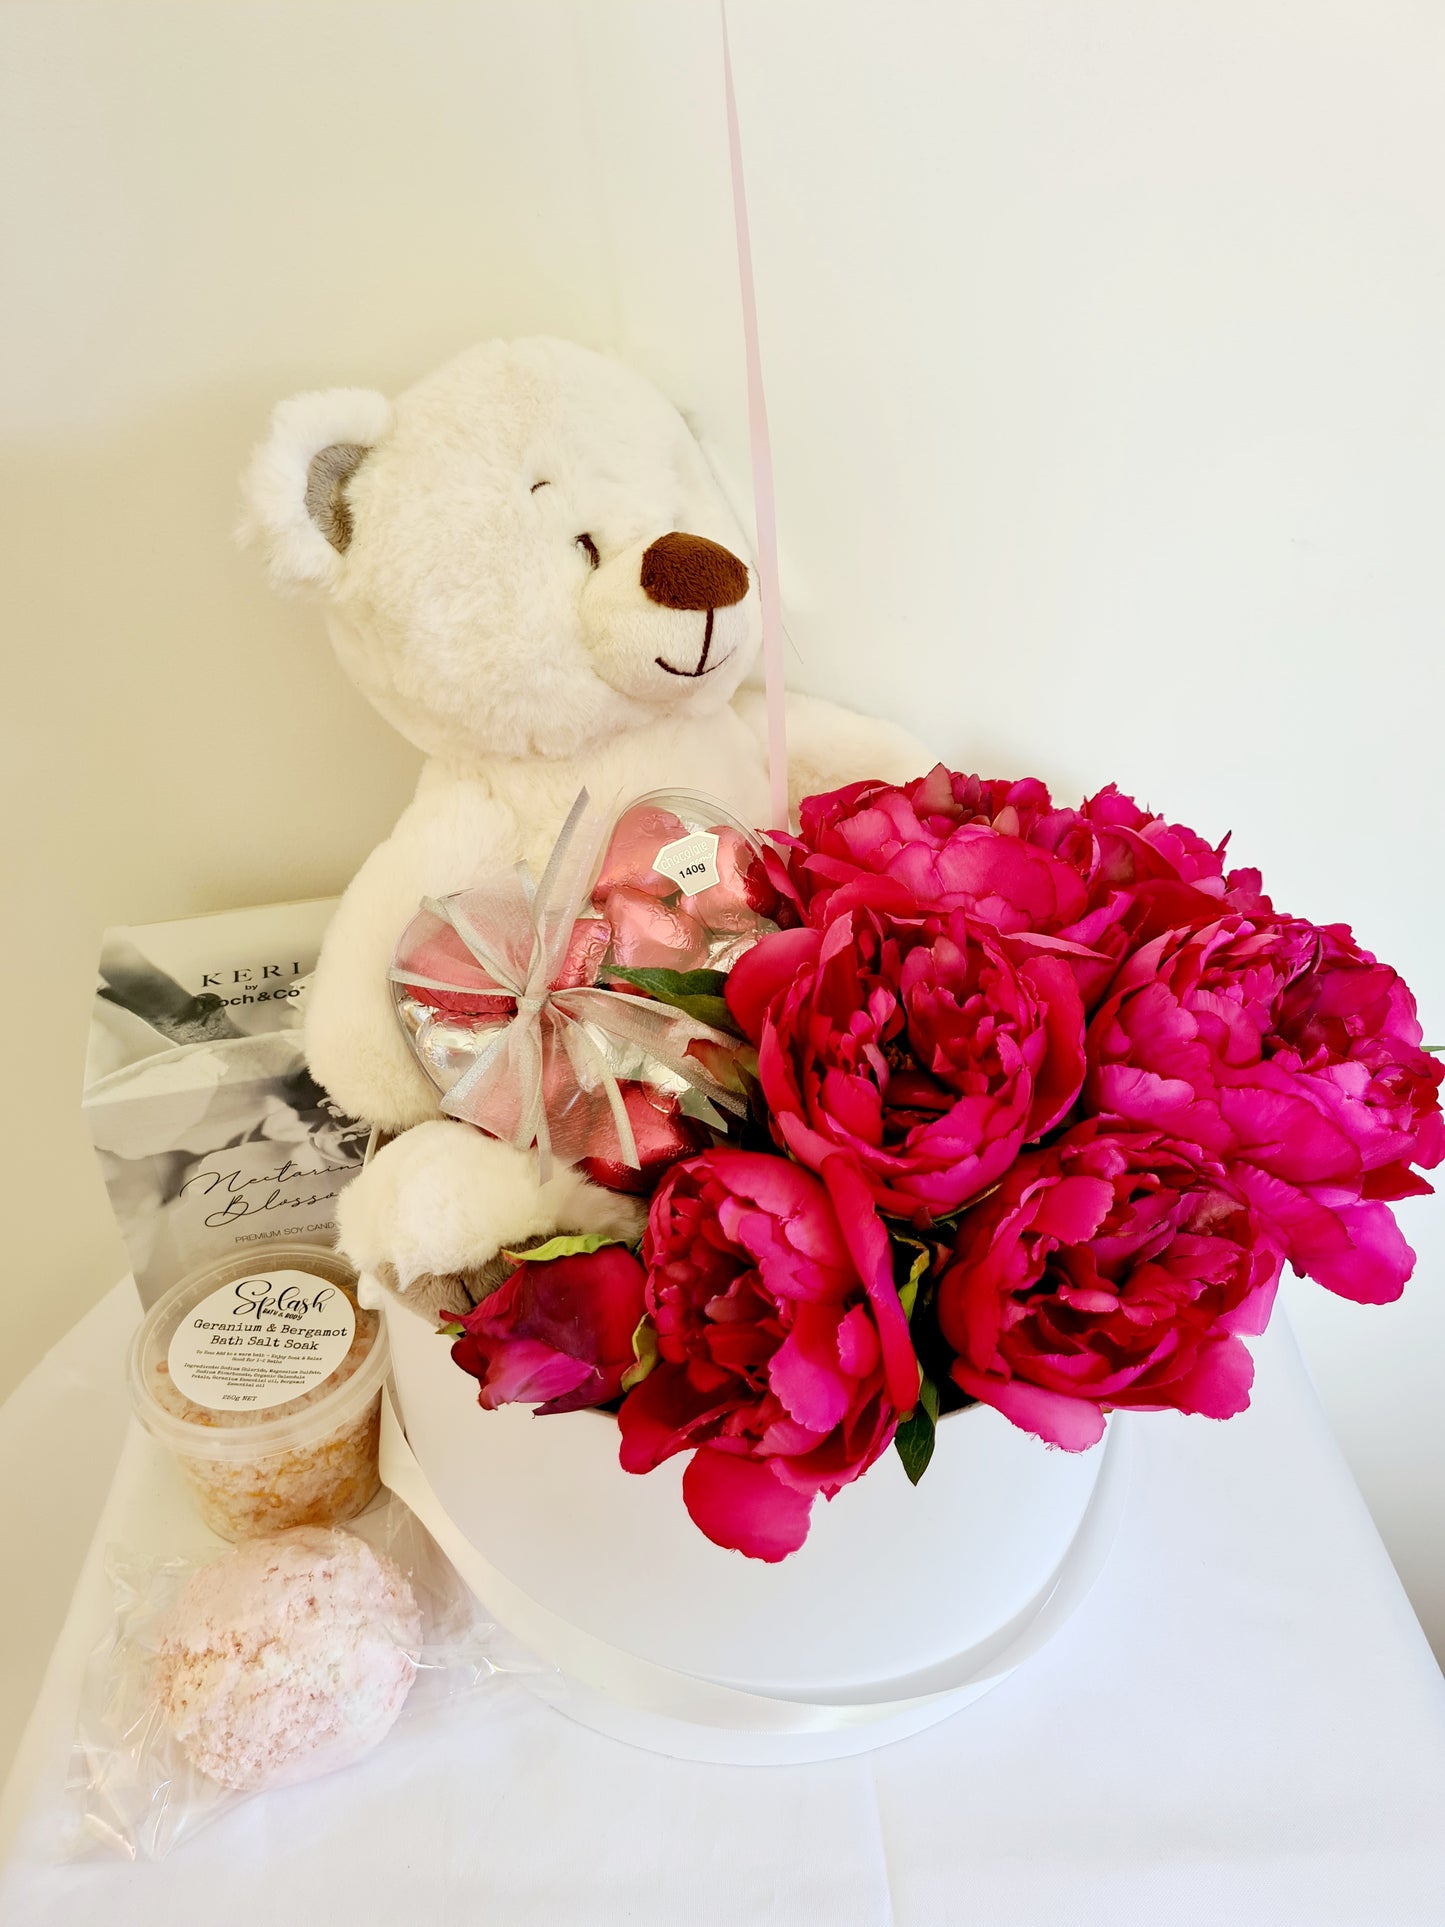 Teddy + Chocolate + Flowers + Pamper